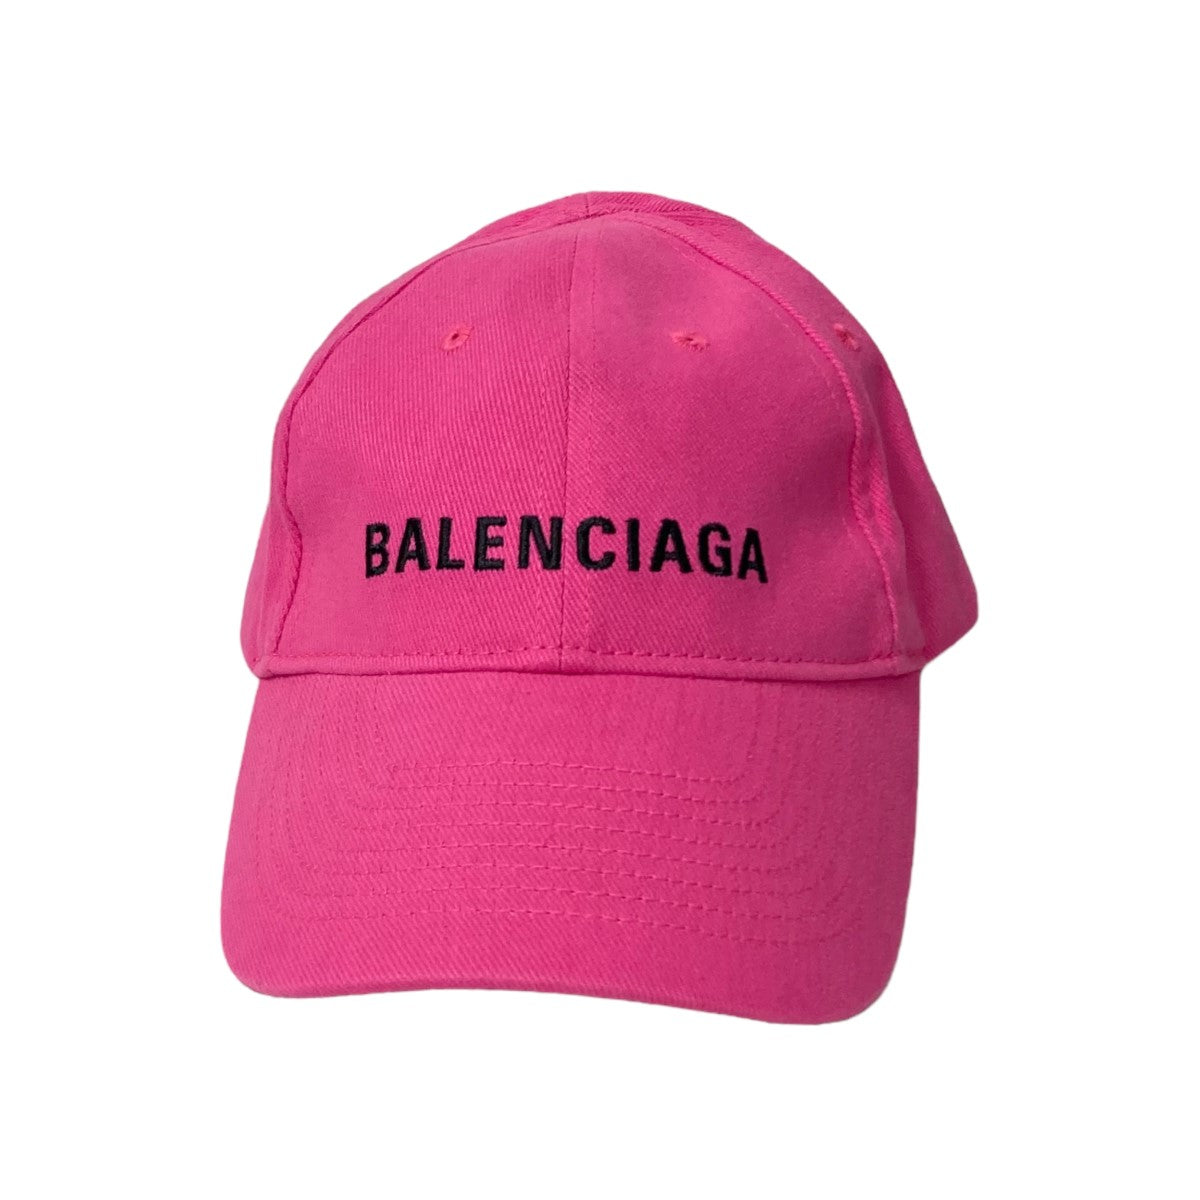 BALENCIAGA(バレンシアガ) ロゴキャップ 529192 ピンク サイズ 12 